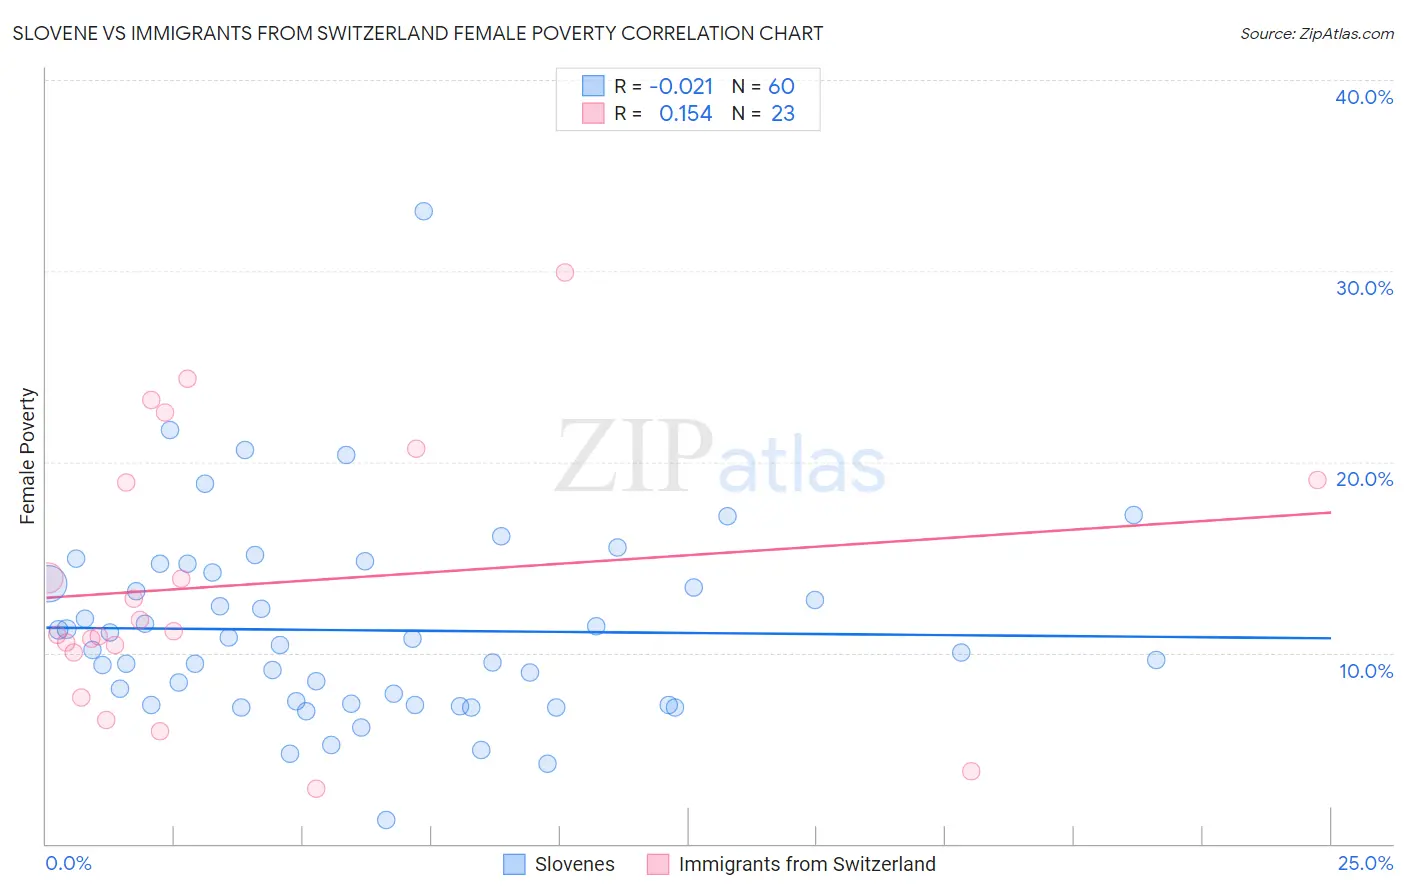 Slovene vs Immigrants from Switzerland Female Poverty